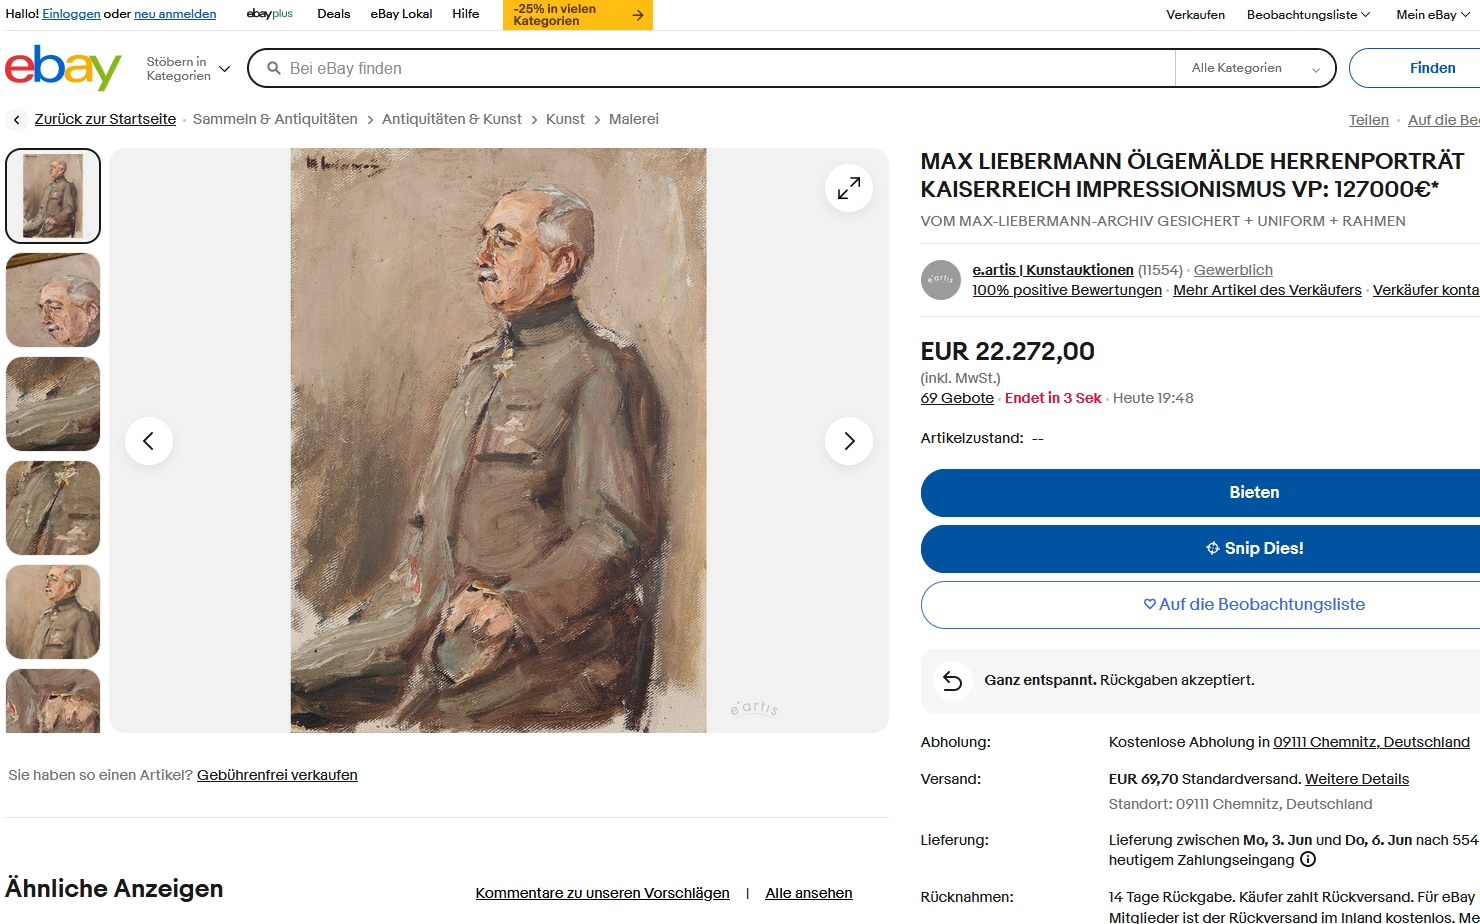 Max Liebermann bargain at Ebay